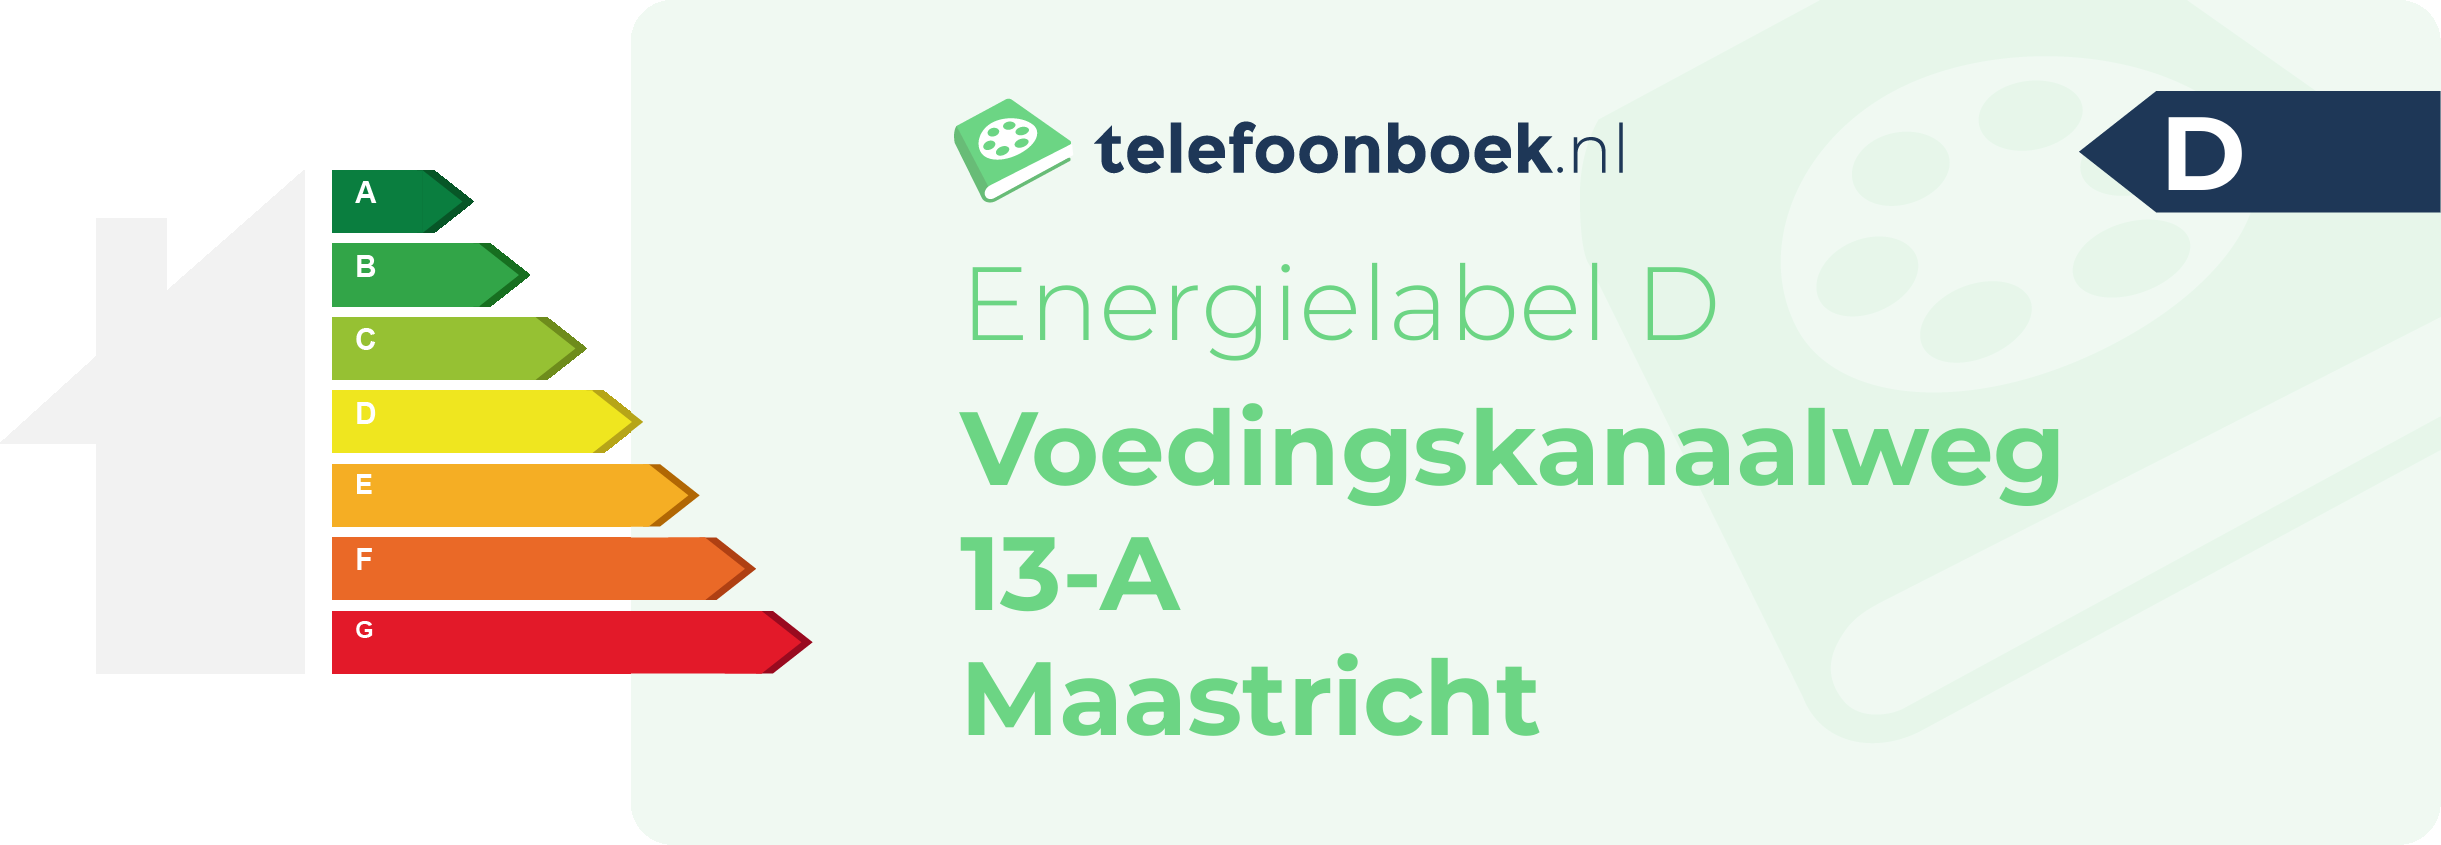 Energielabel Voedingskanaalweg 13-A Maastricht